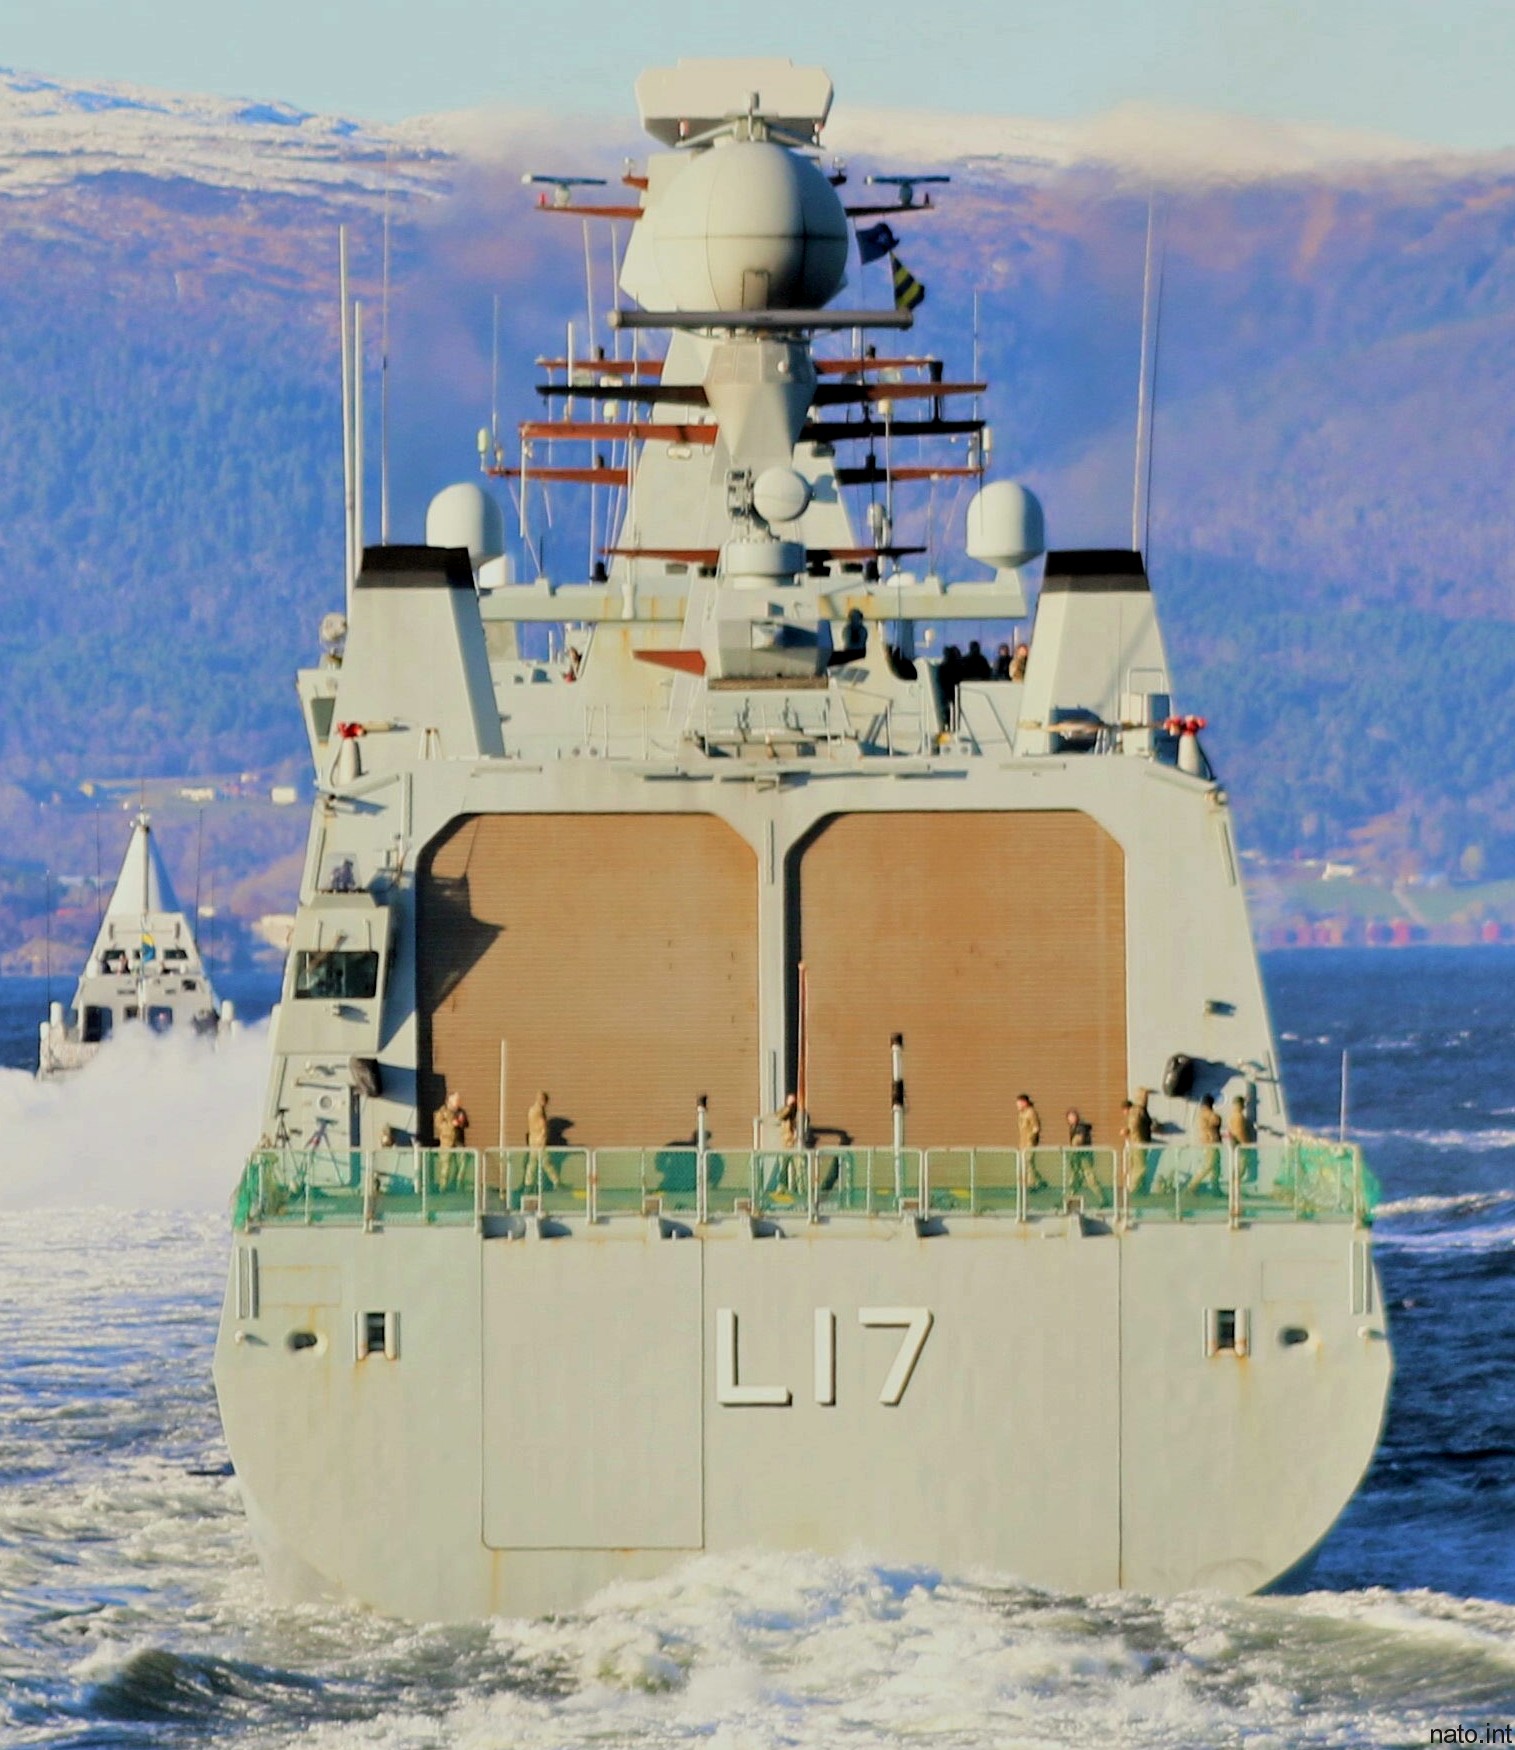 f-342 hdms esbern snare l-17 frigate command support ship royal danish navy 88